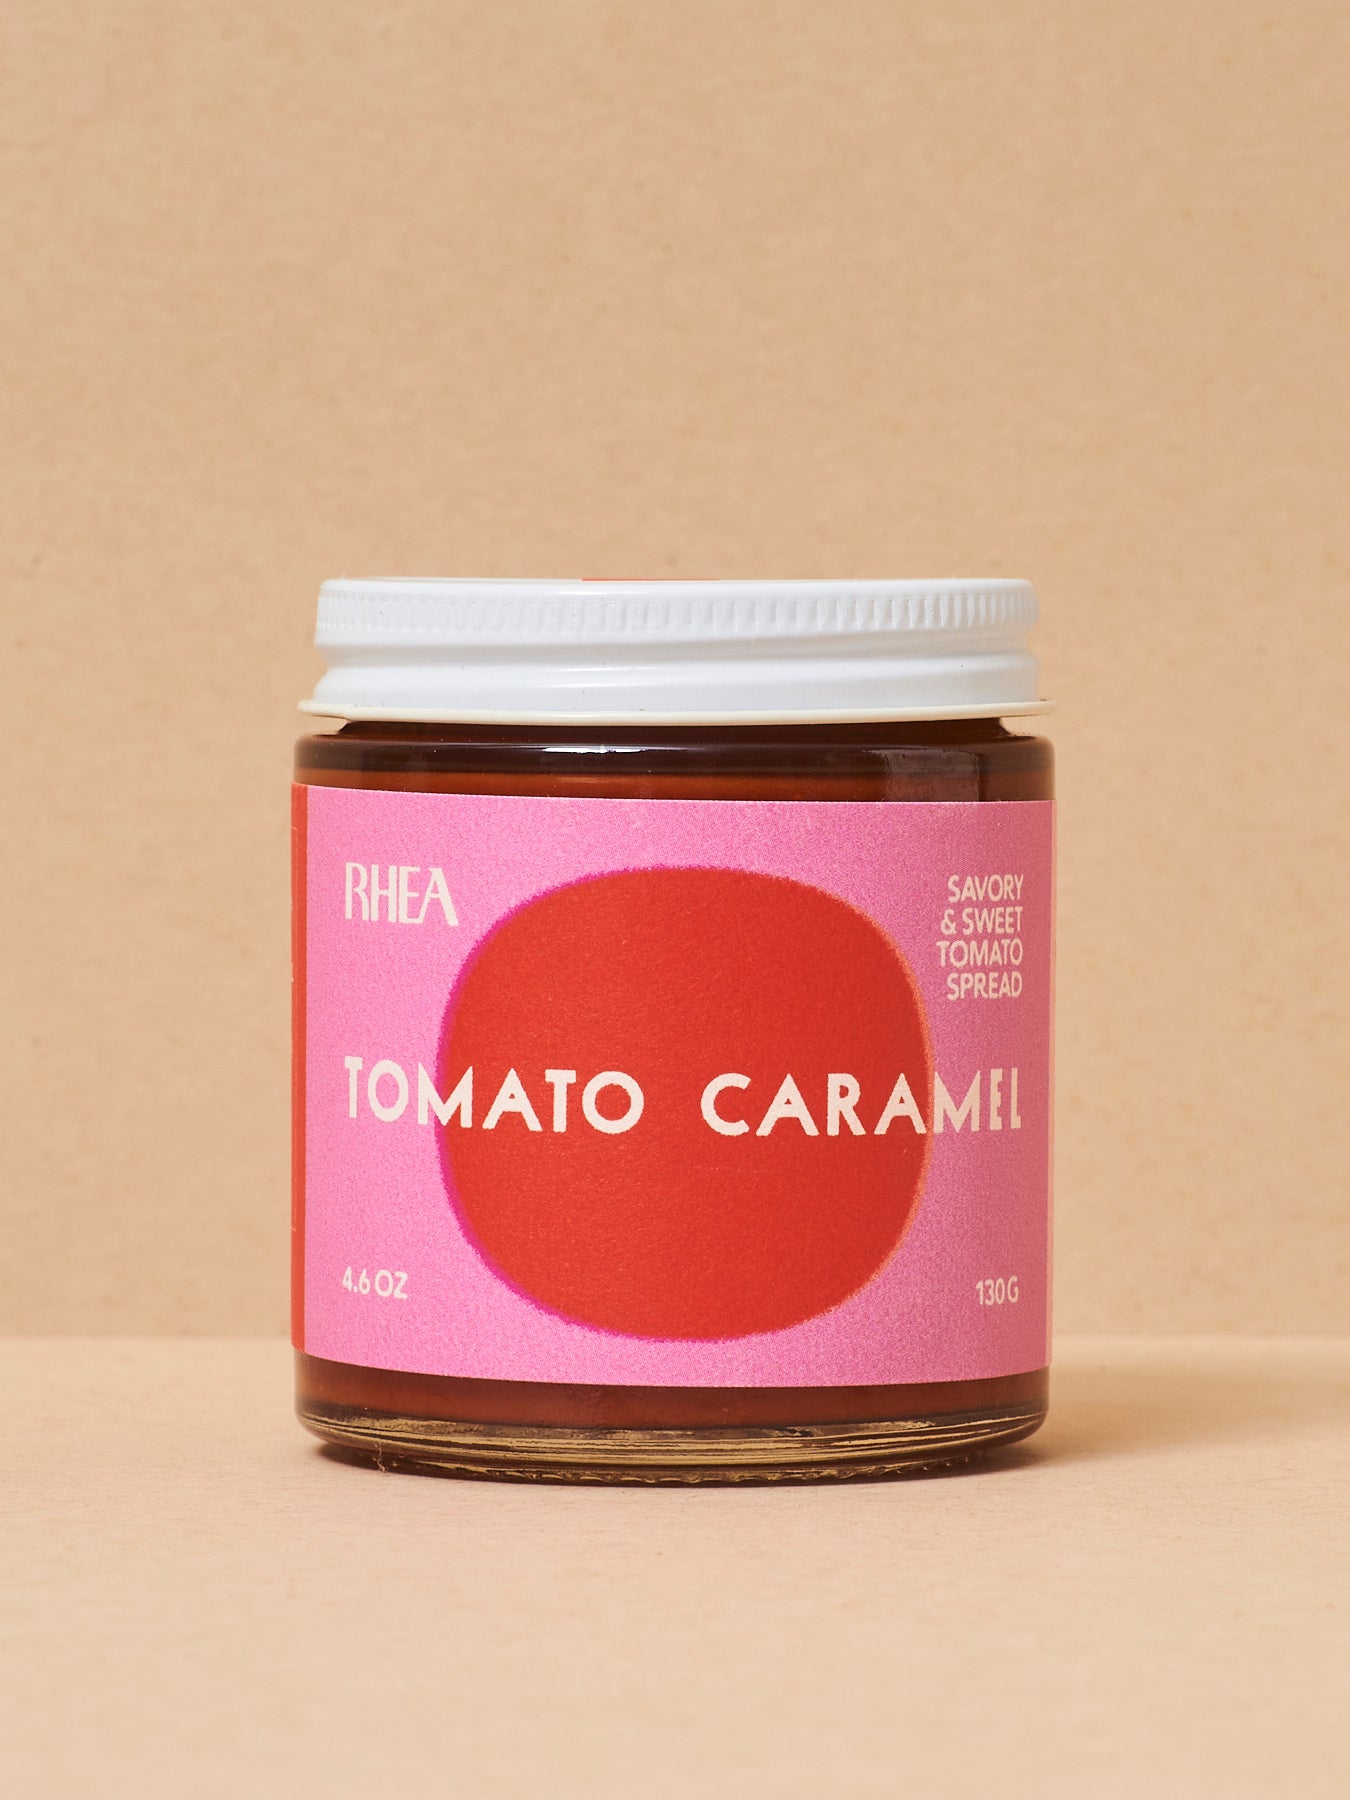 Tomato Caramel